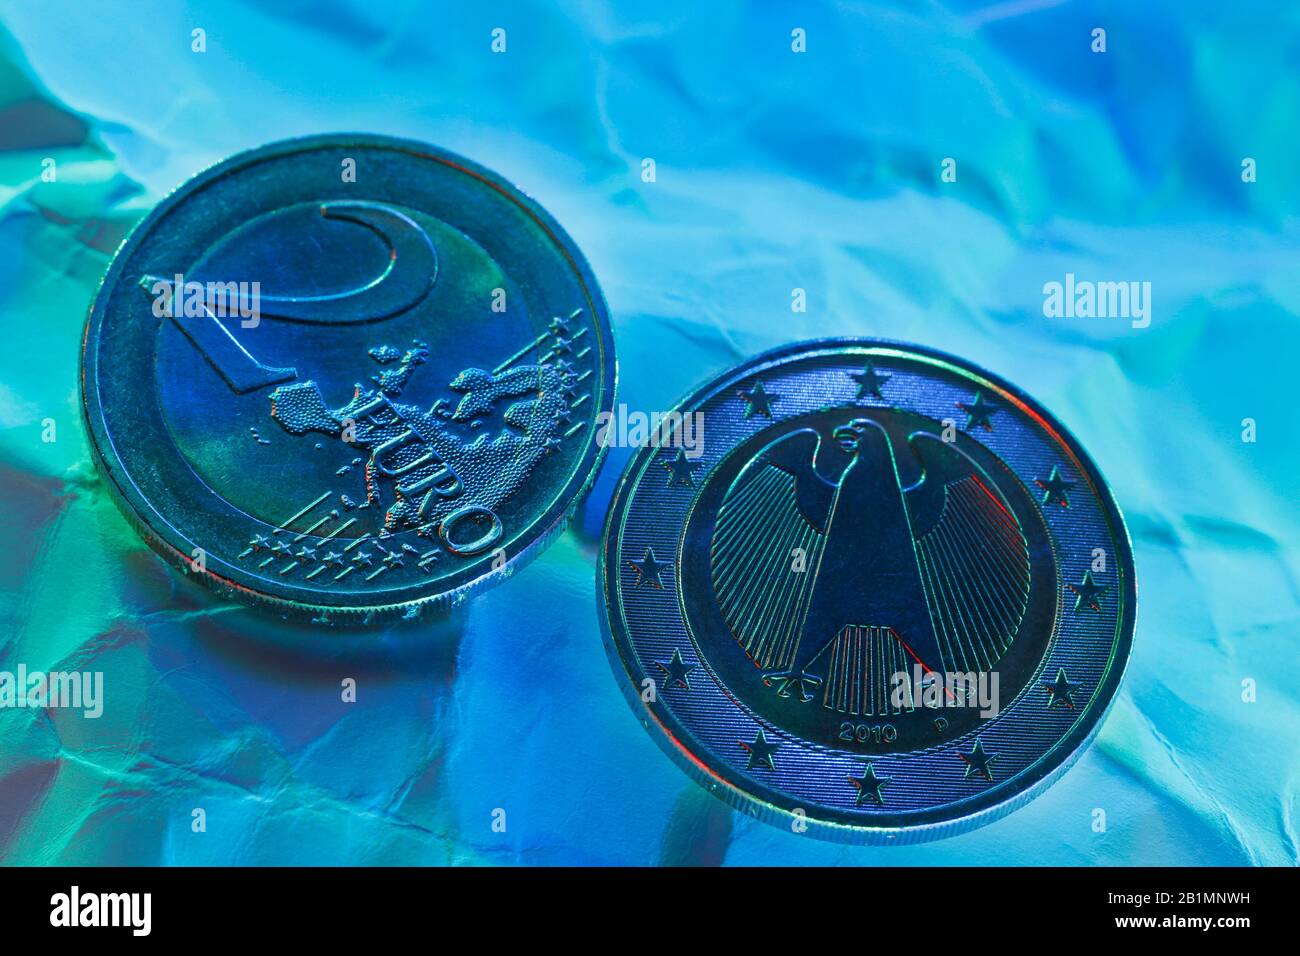 Zwei Euromünzen beleuchtet in classic-blue Stock Photo